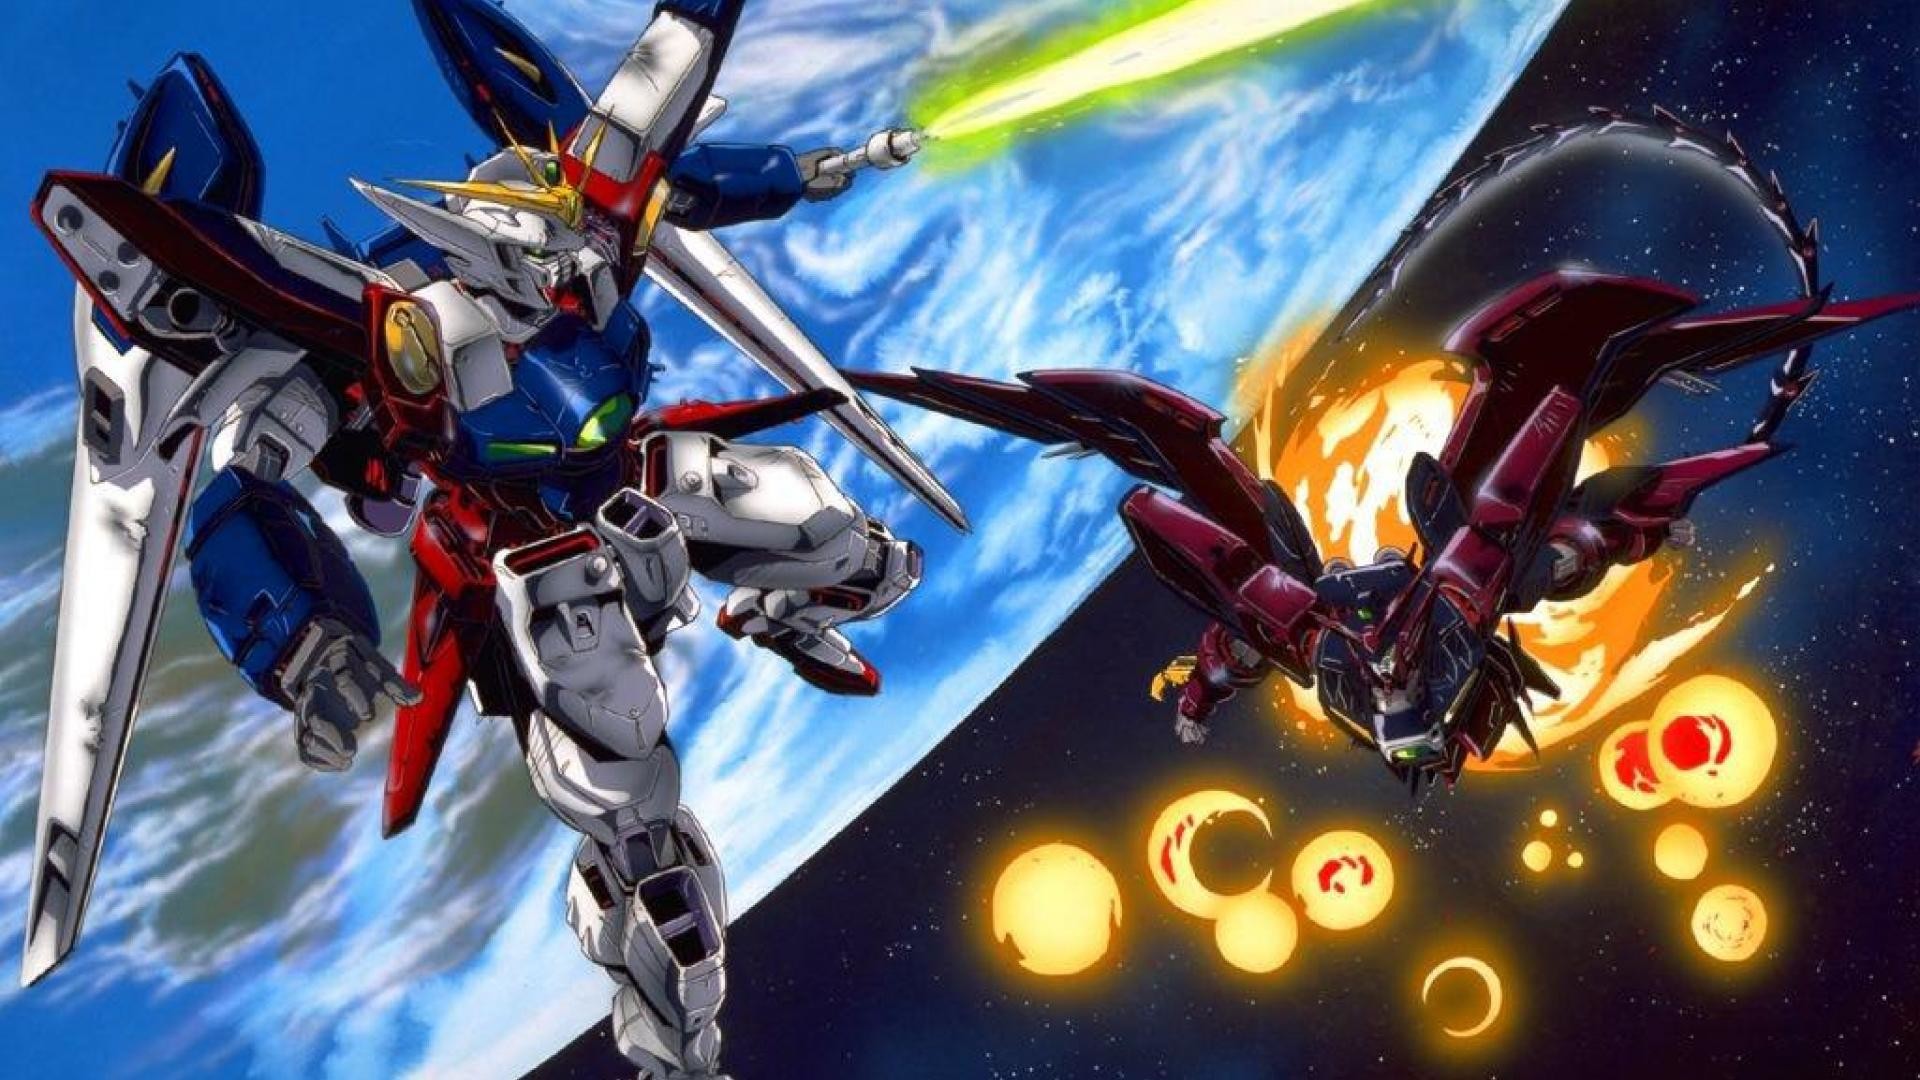 1920x1080 V.72: Gundam Wallpapers, HD Images of Gundam, Ultra HD 4K Gundam ...